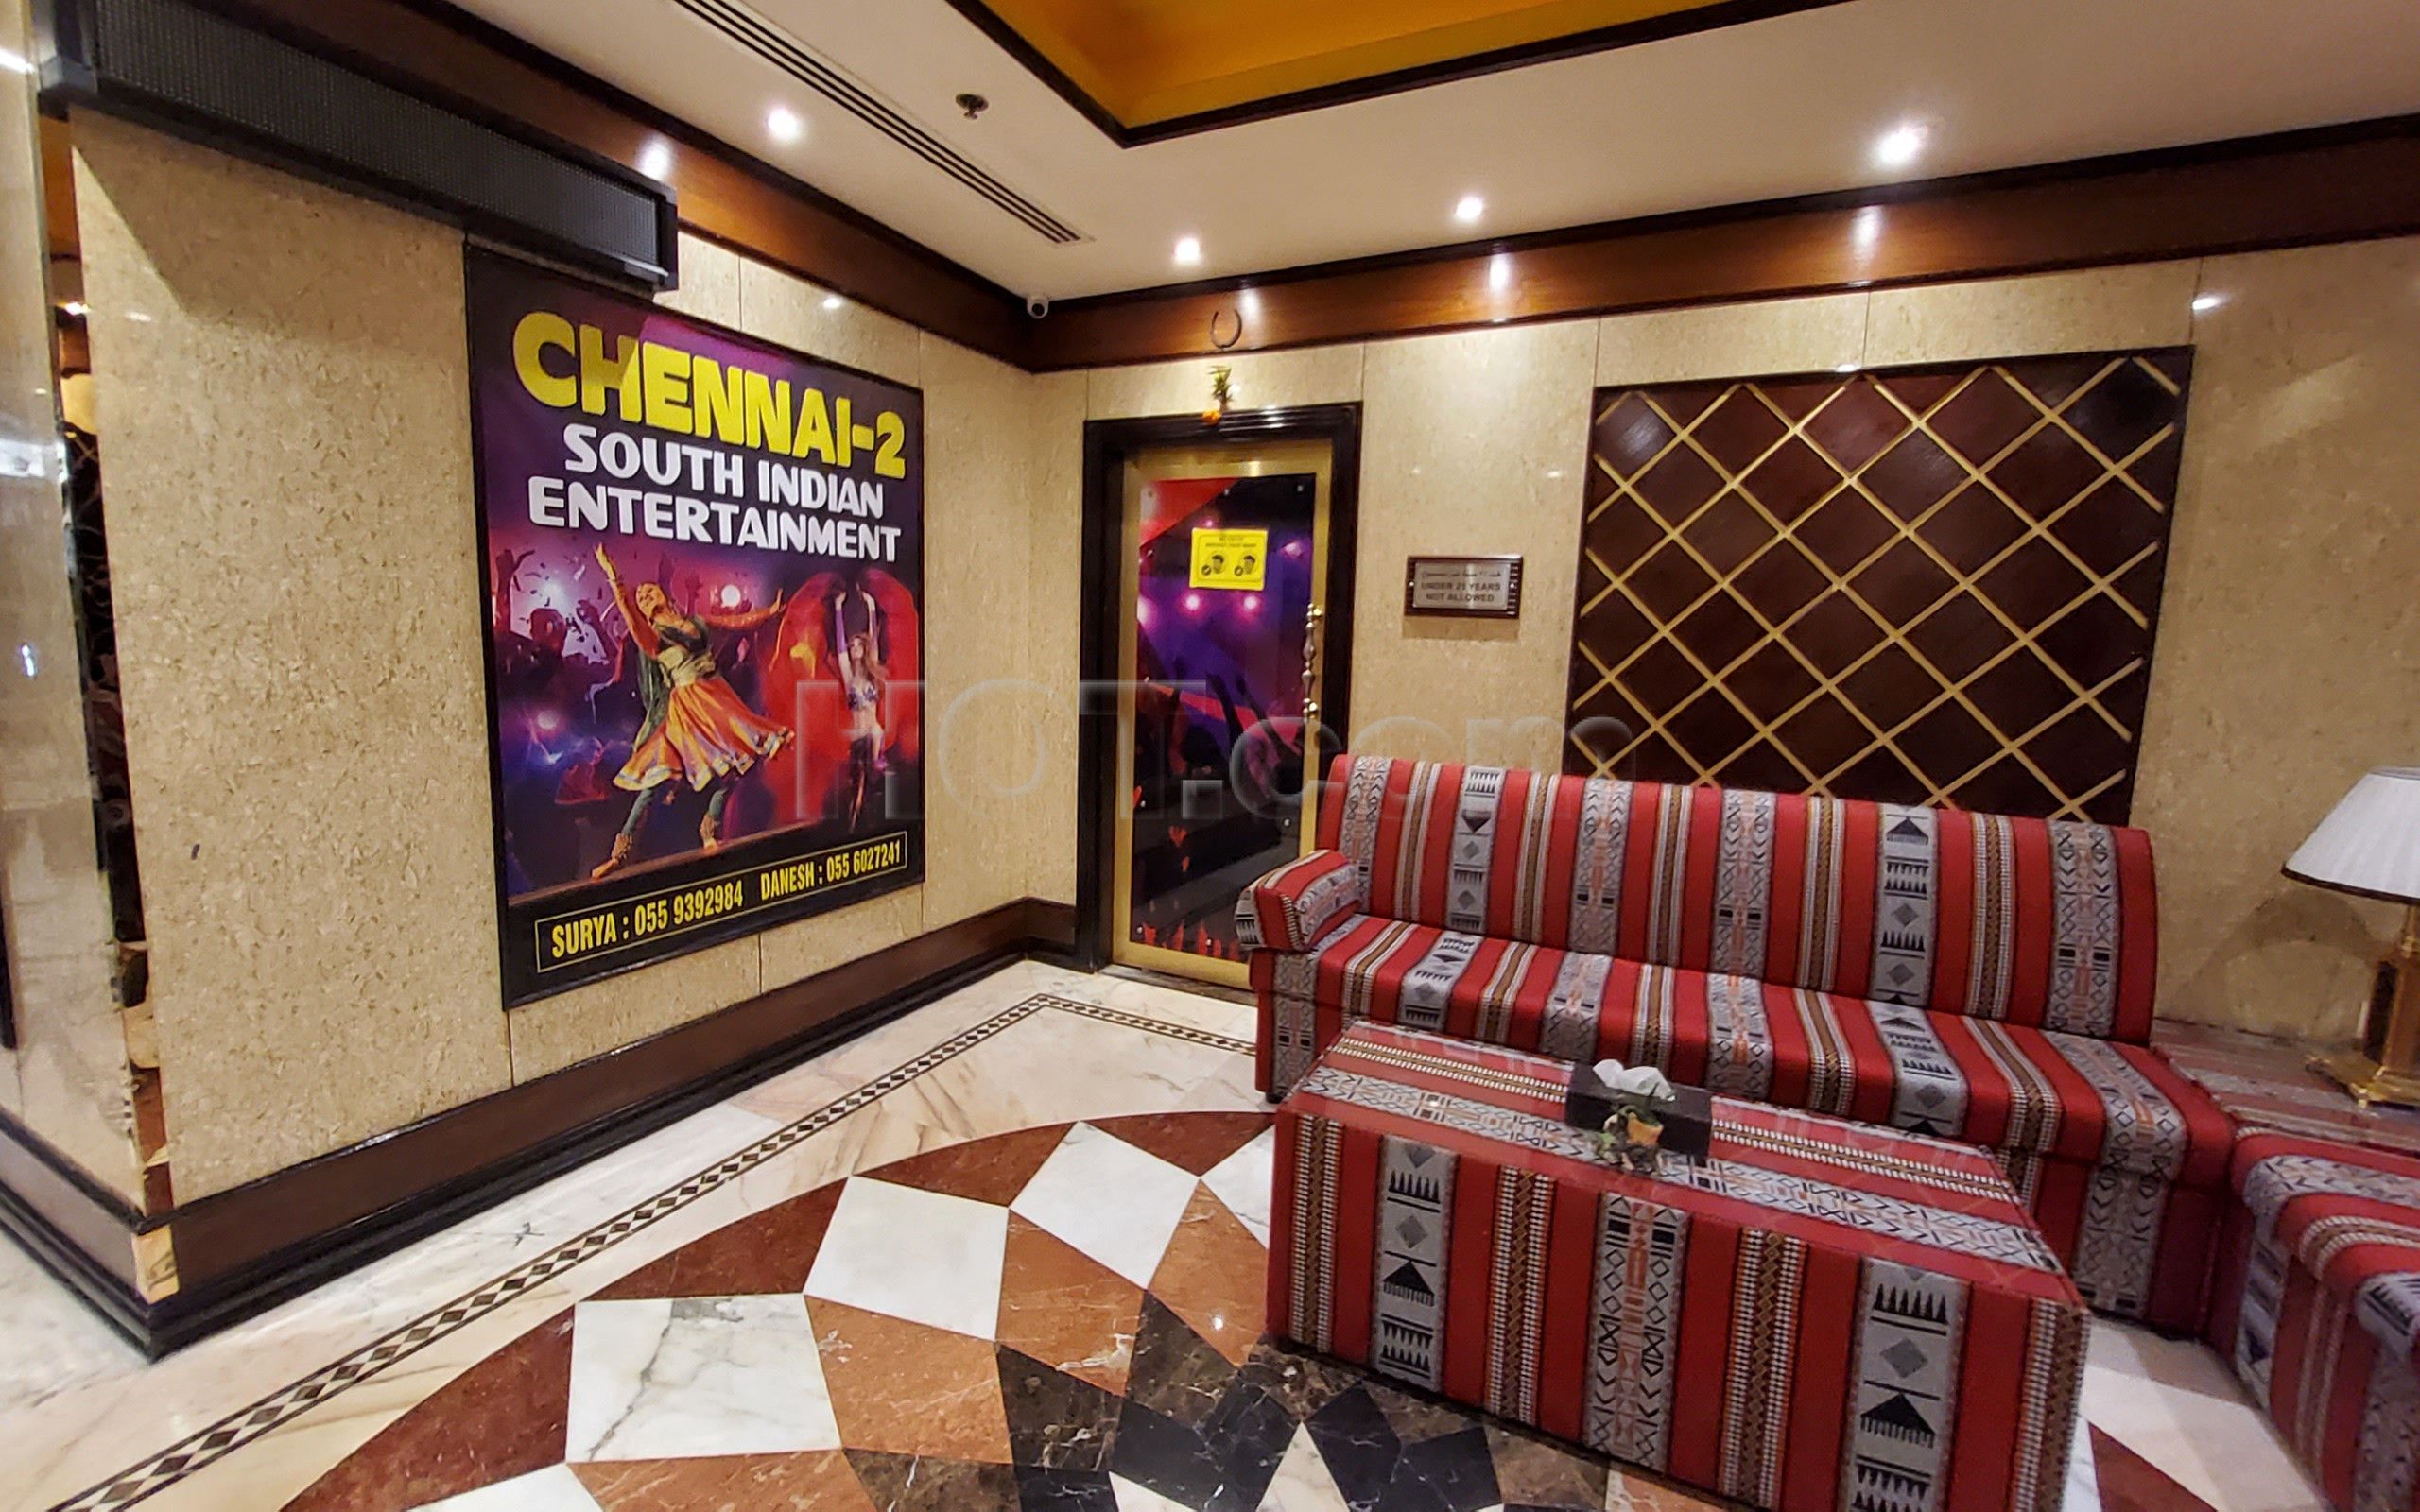 Dubai, United Arab Emirates Chennai 2 South Indian Entertainment